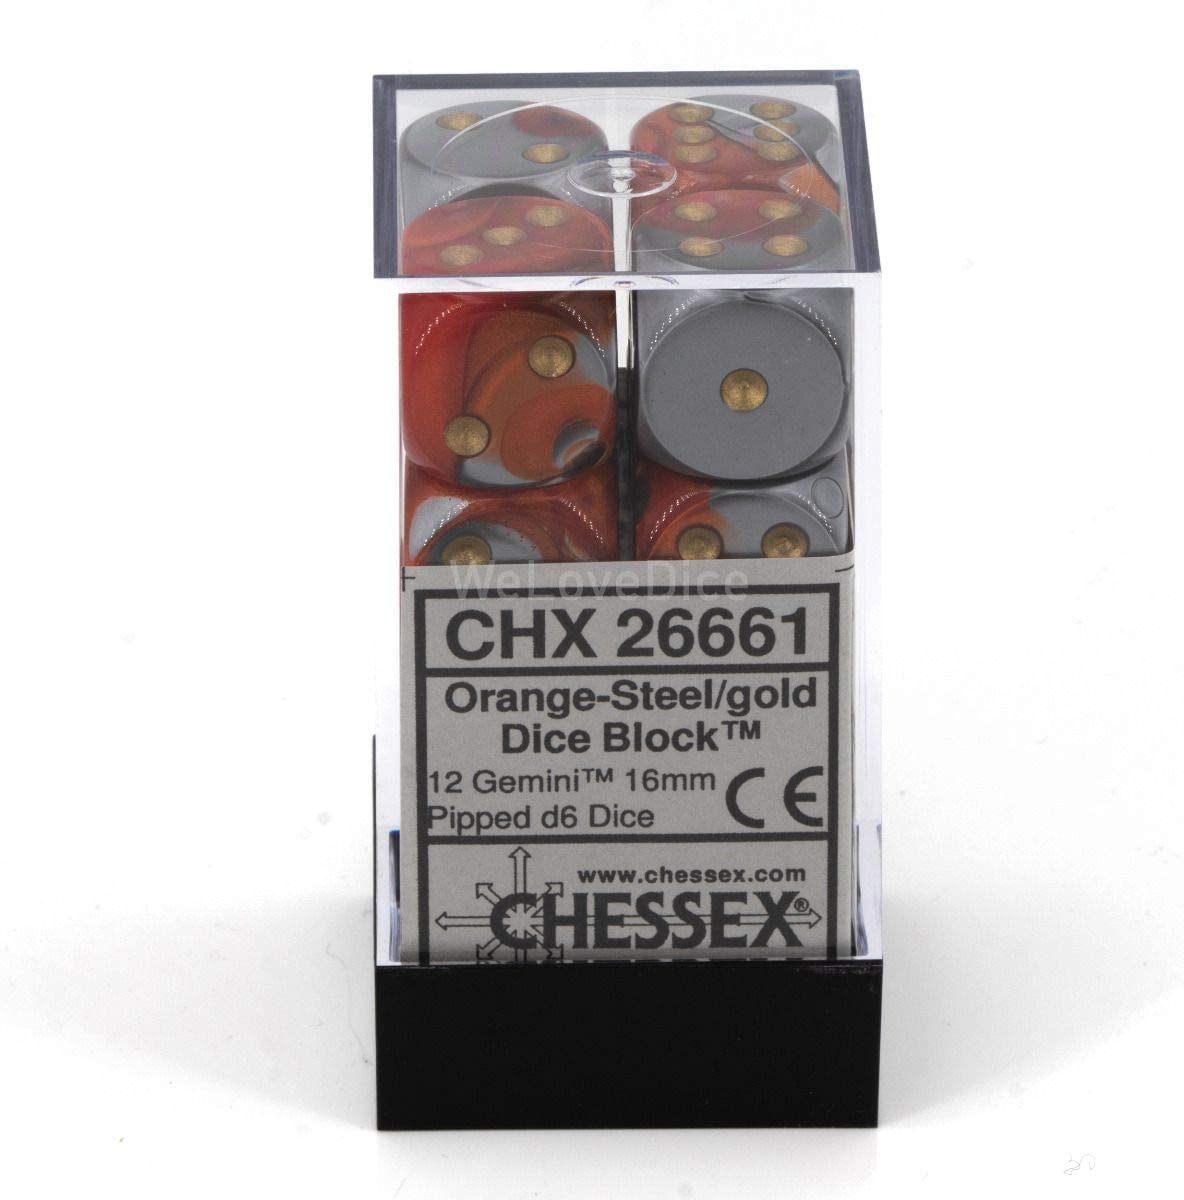 Chessex Dice: D6 Block 16mm - Gemini - Orange Steel with Gold (CHX 26661) - Gamescape